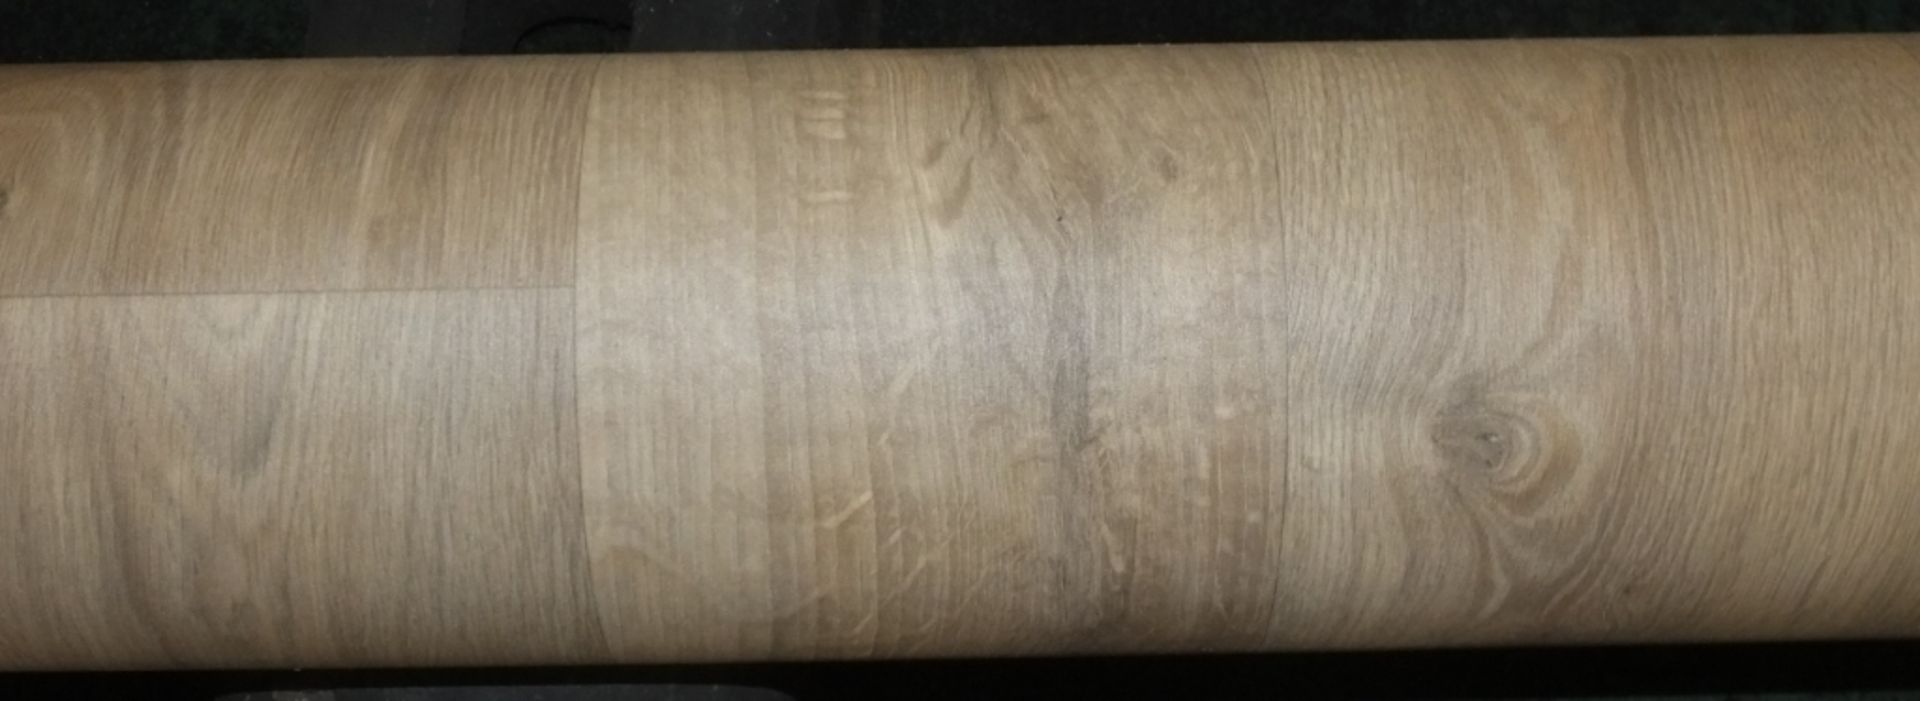 Wooden Laminate Effect Flooring - 9M x 4M approx - Bild 2 aus 2